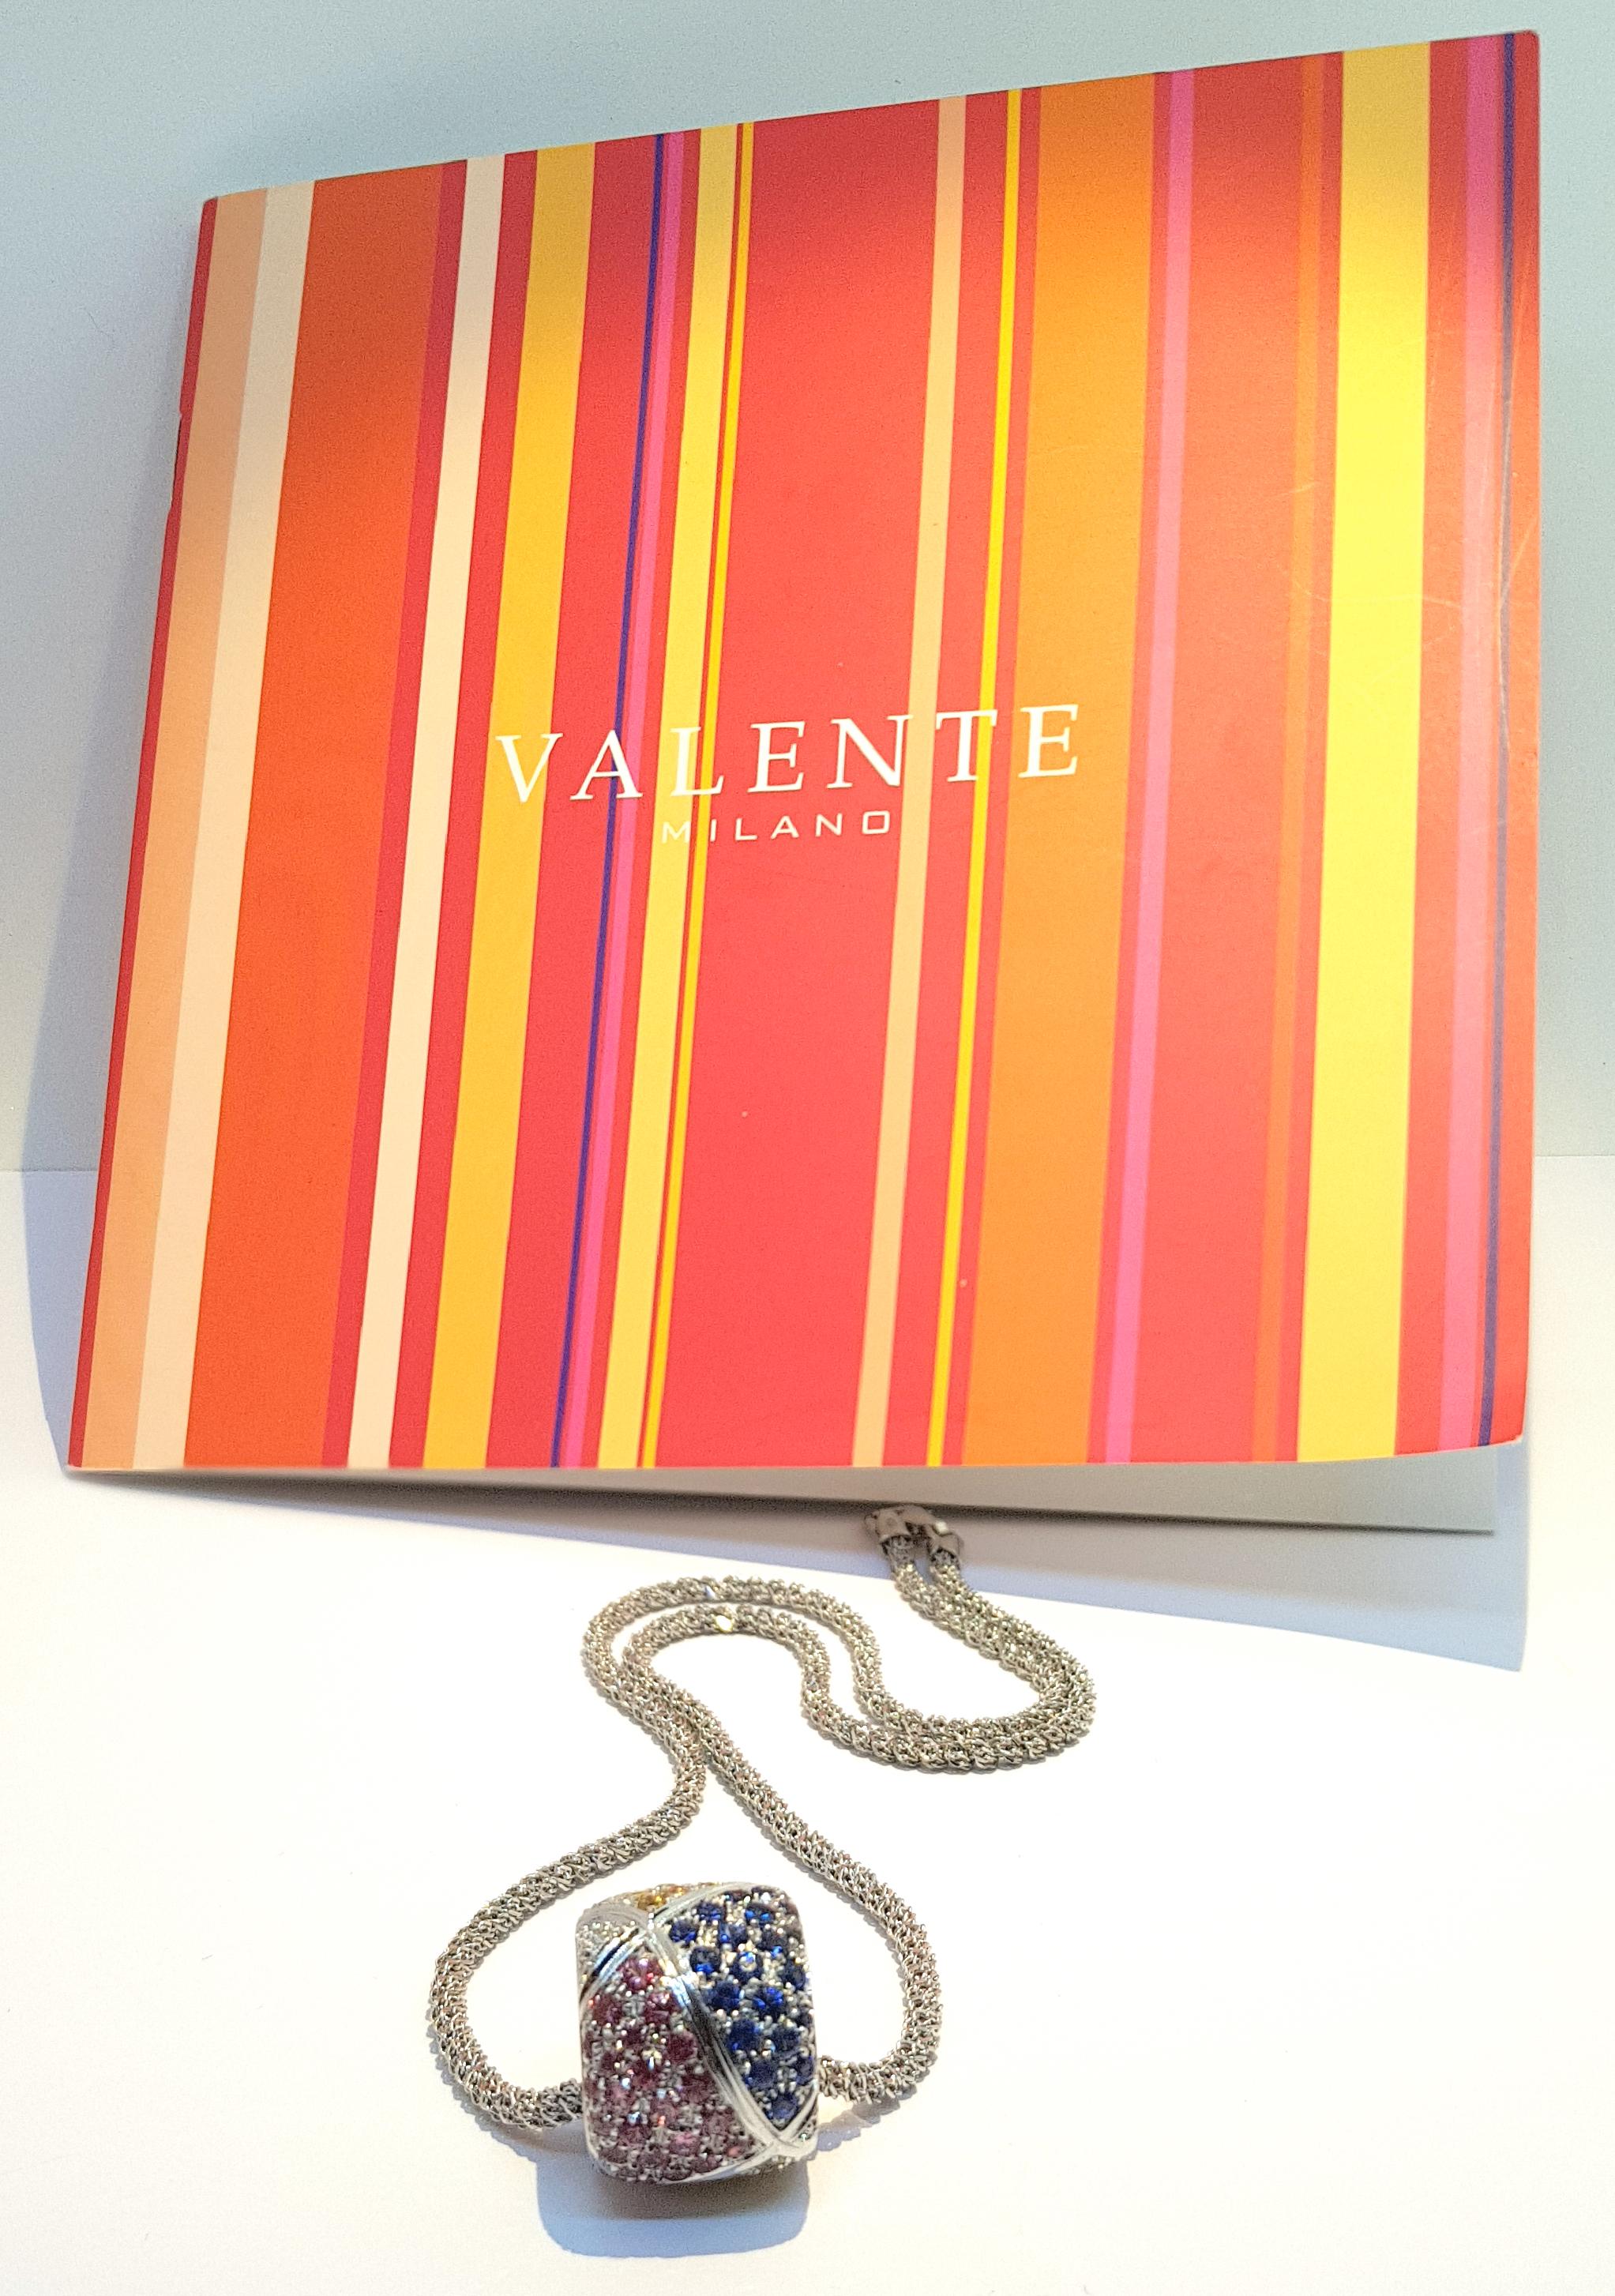 Brilliant Cut Valente Clash 18.6 Carat Multicolored Sapphires 18 Karat Gold Pendant Necklace